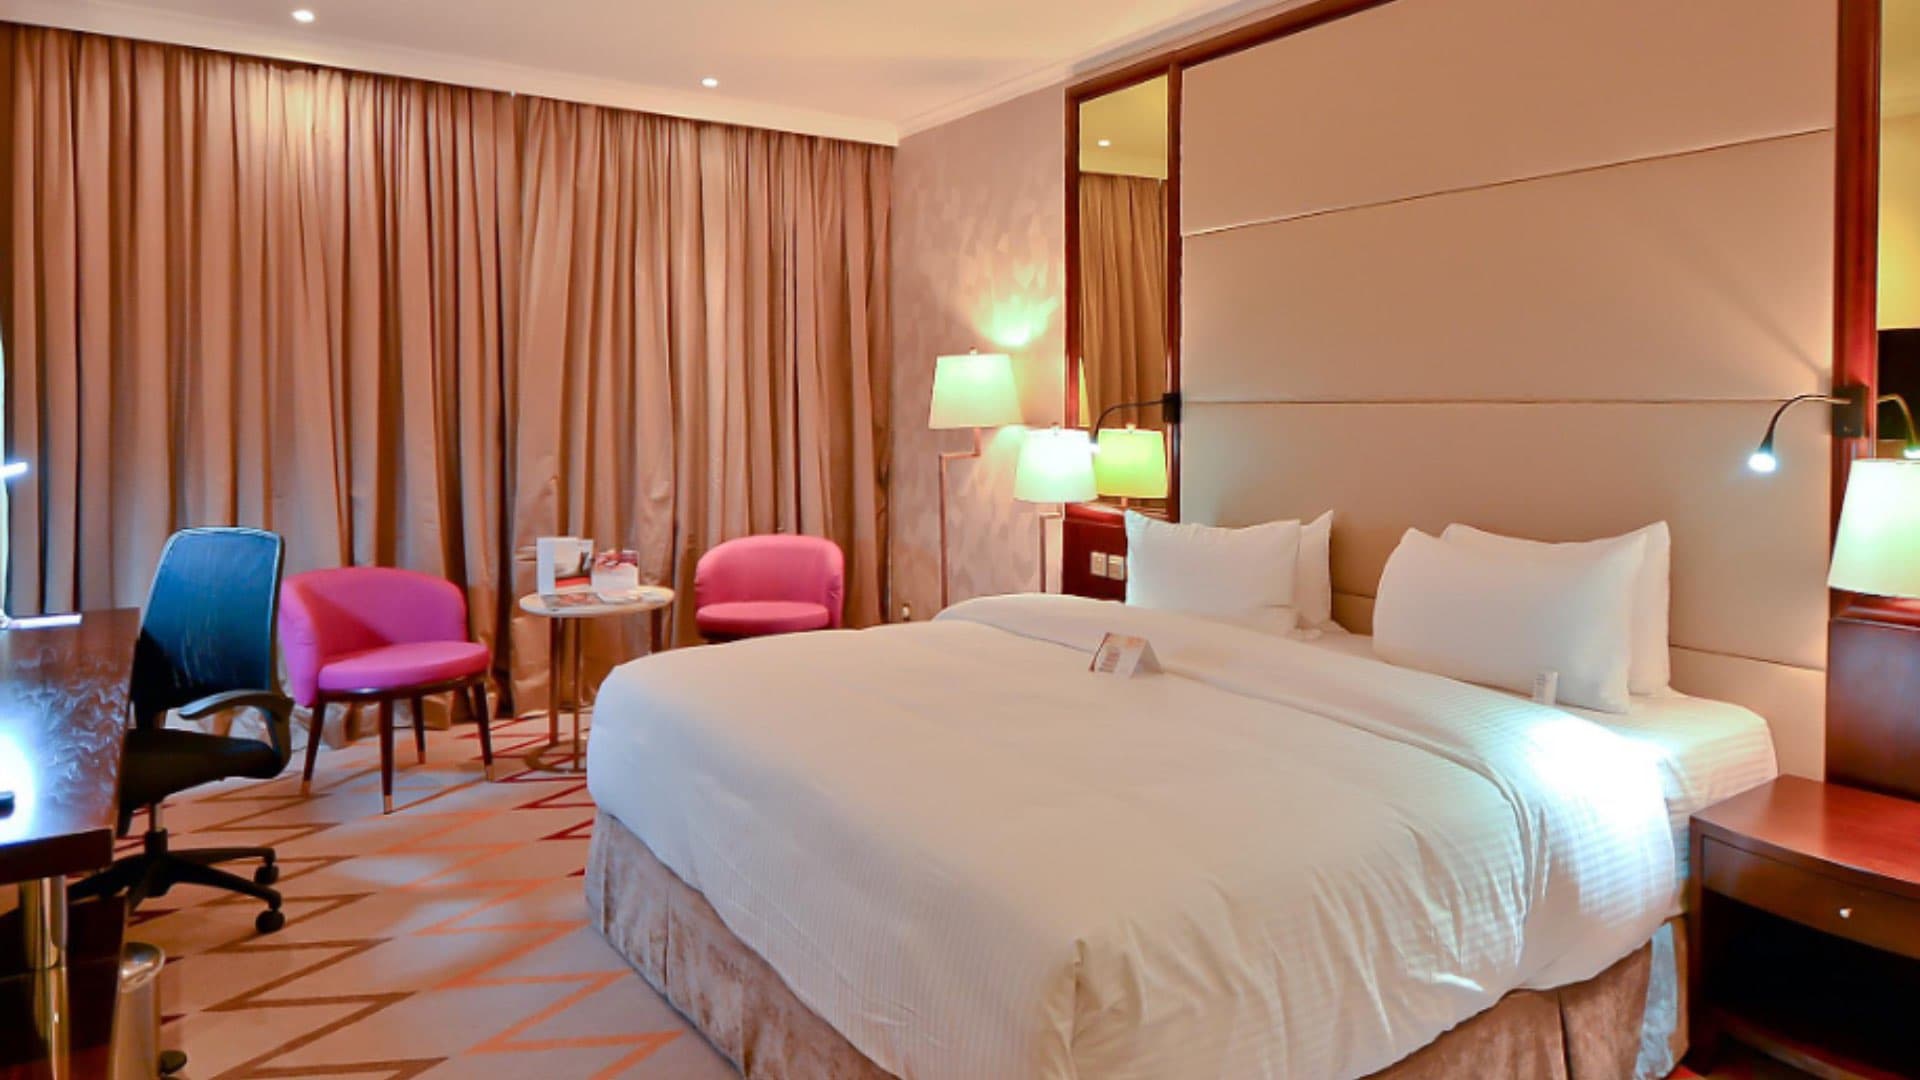 206 Bedroom Hotel For Sale Nairobi Lp08568 1582a5b96f43e600.jpg